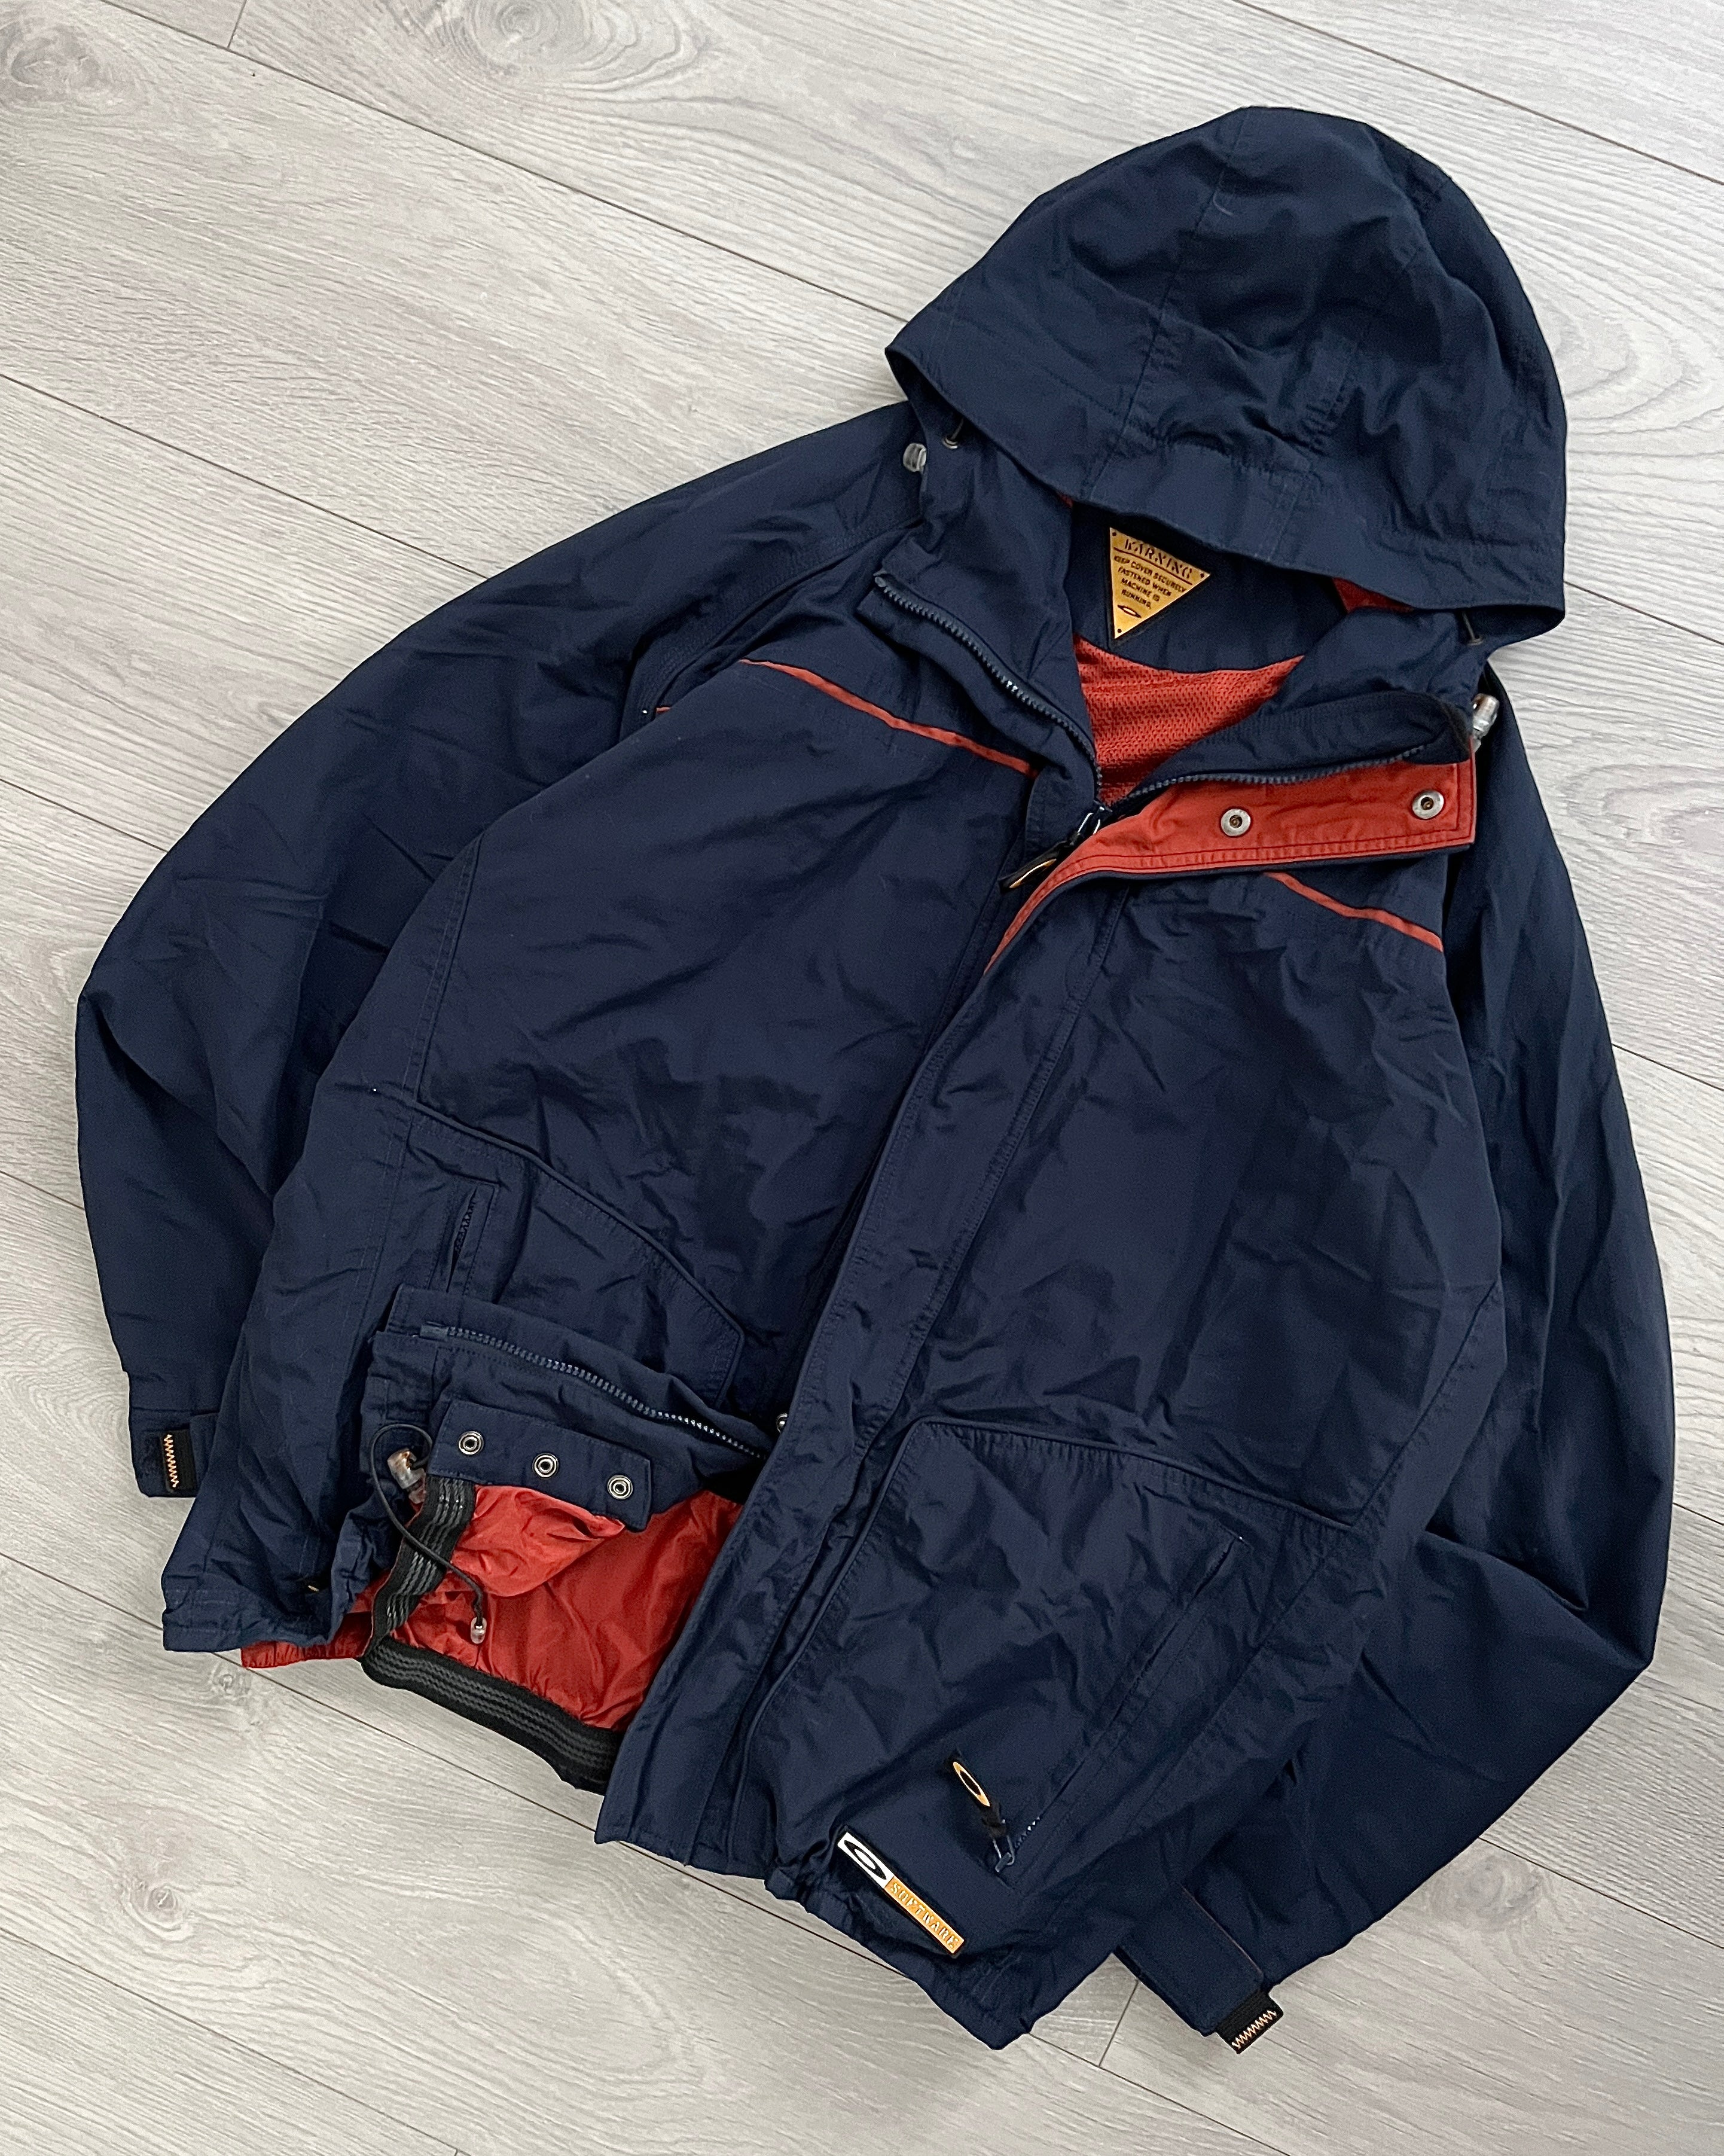 Oakley Software 00s Technical Two-Tone Ski Jacket - Size M – NDWC0